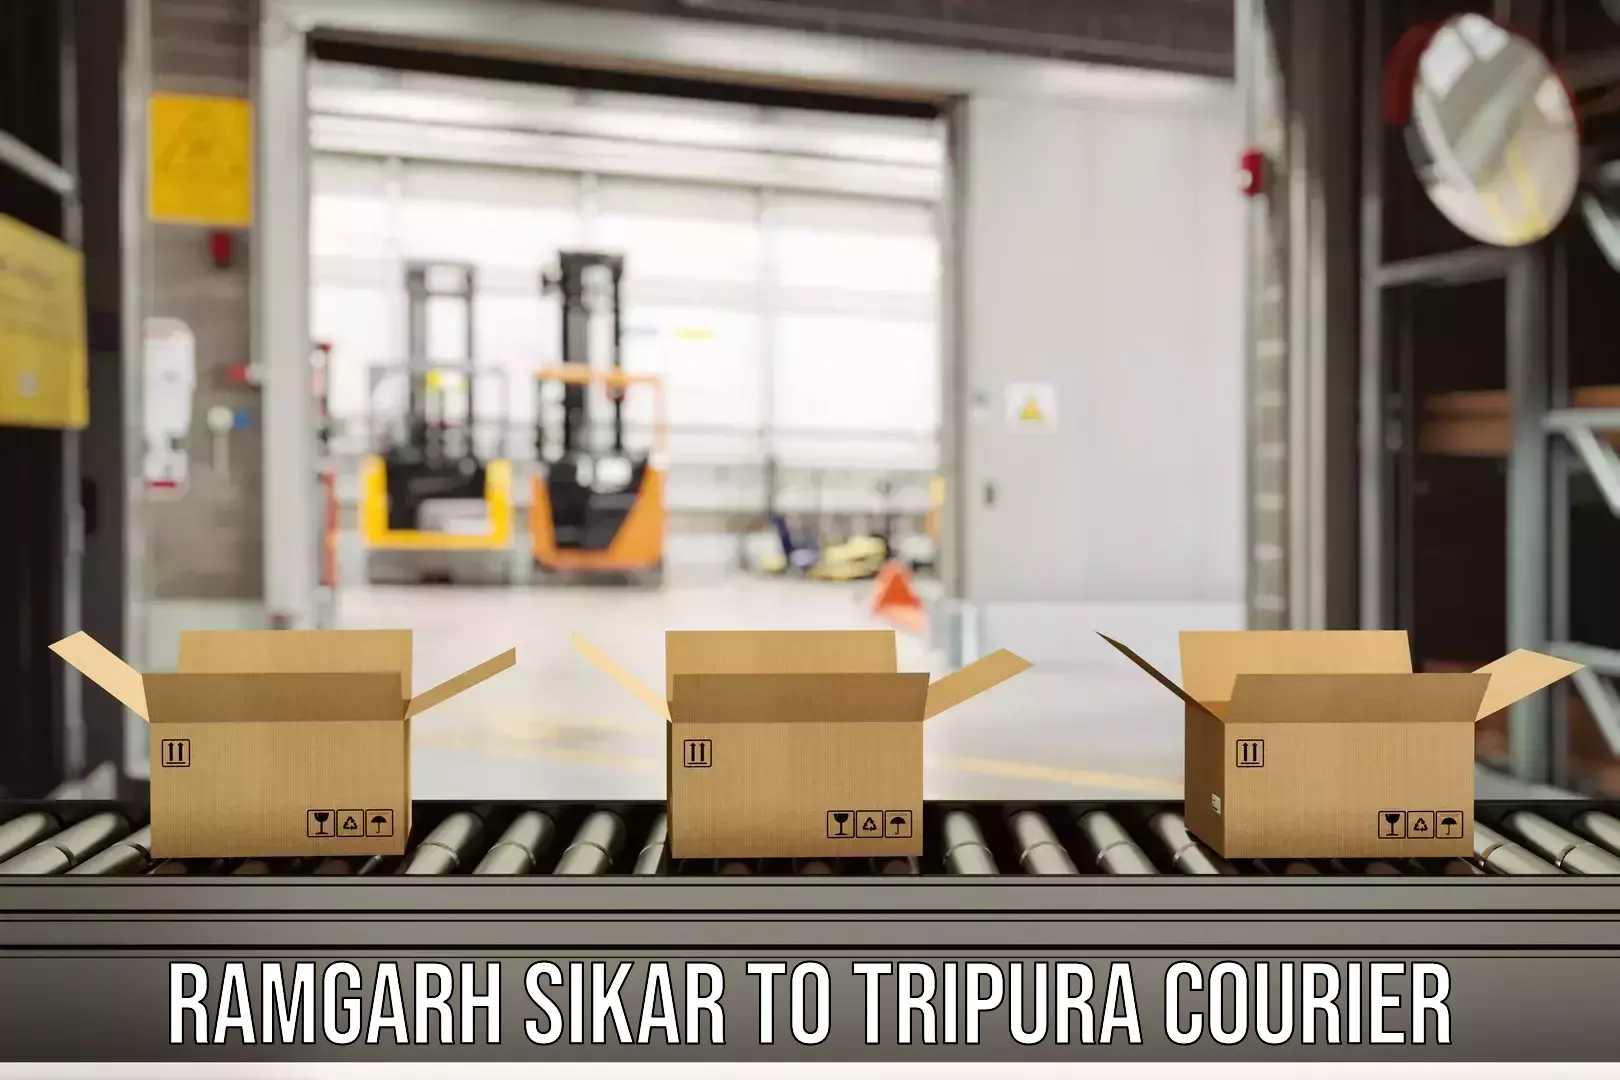 Efficient order fulfillment Ramgarh Sikar to Amarpur